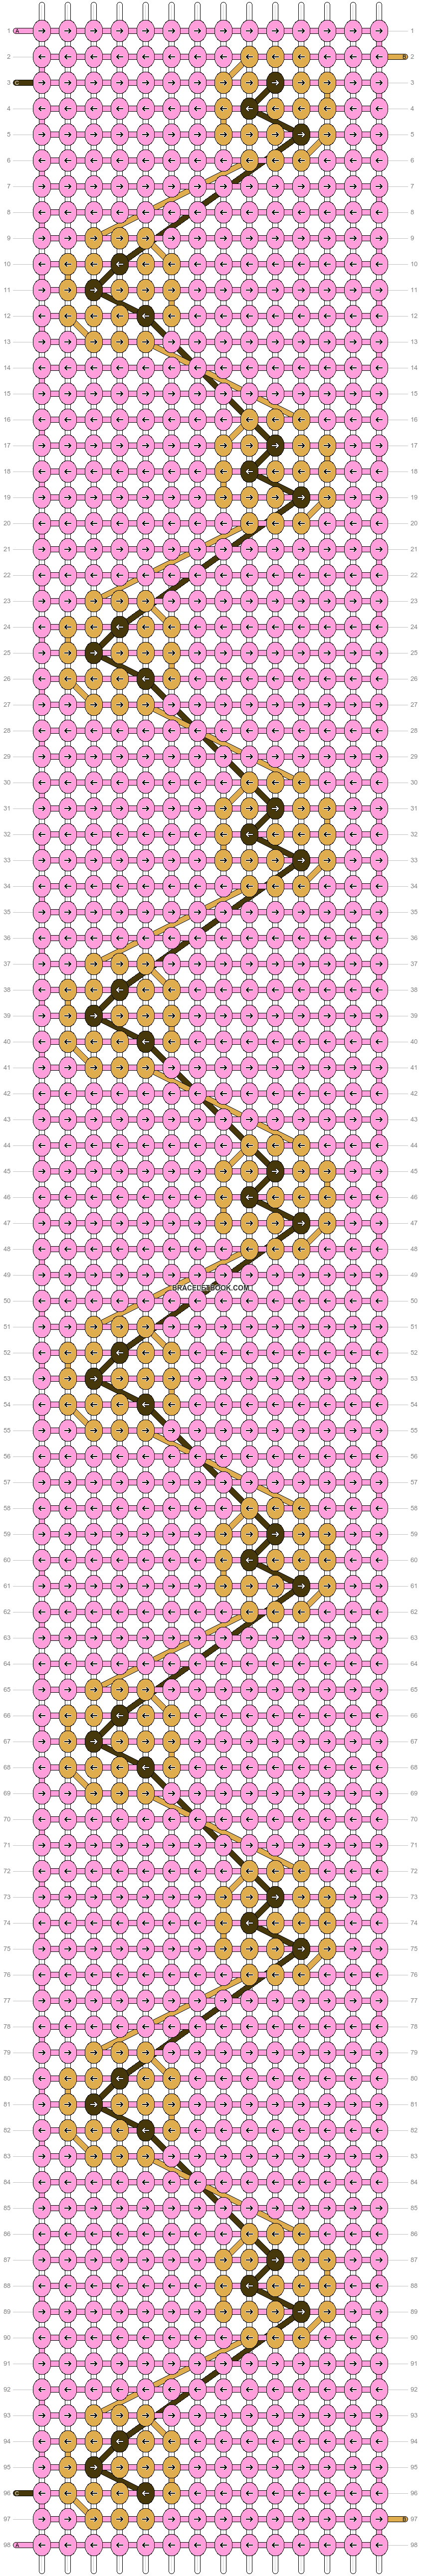 Alpha pattern #36767 variation #37498 pattern